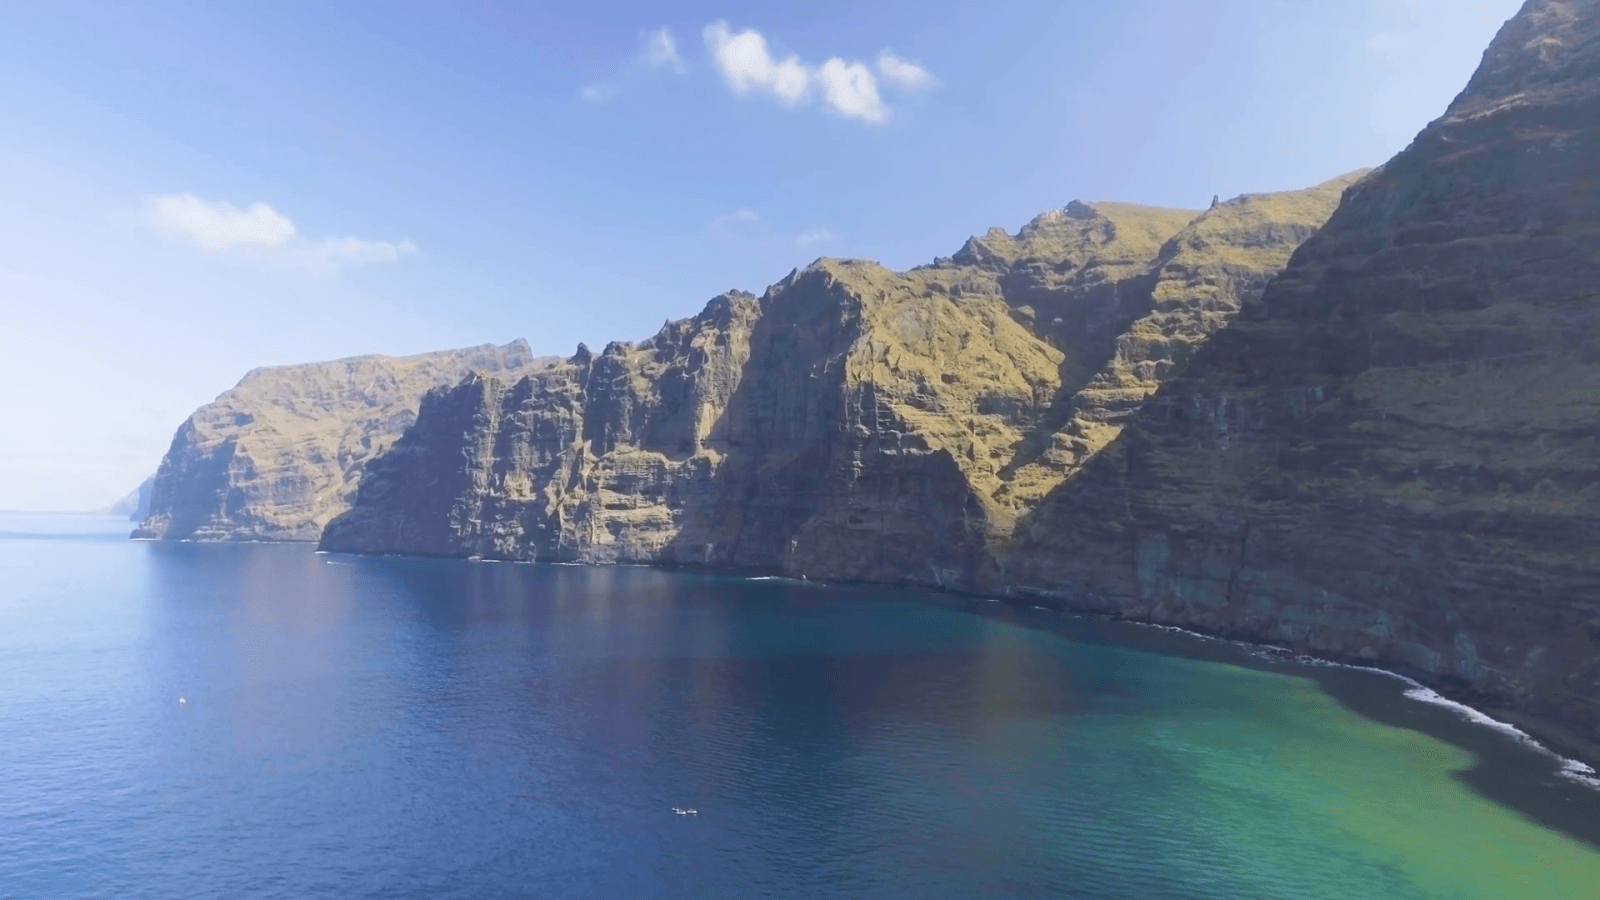 Attractions in Tenerife - Los Gigantes cliffs